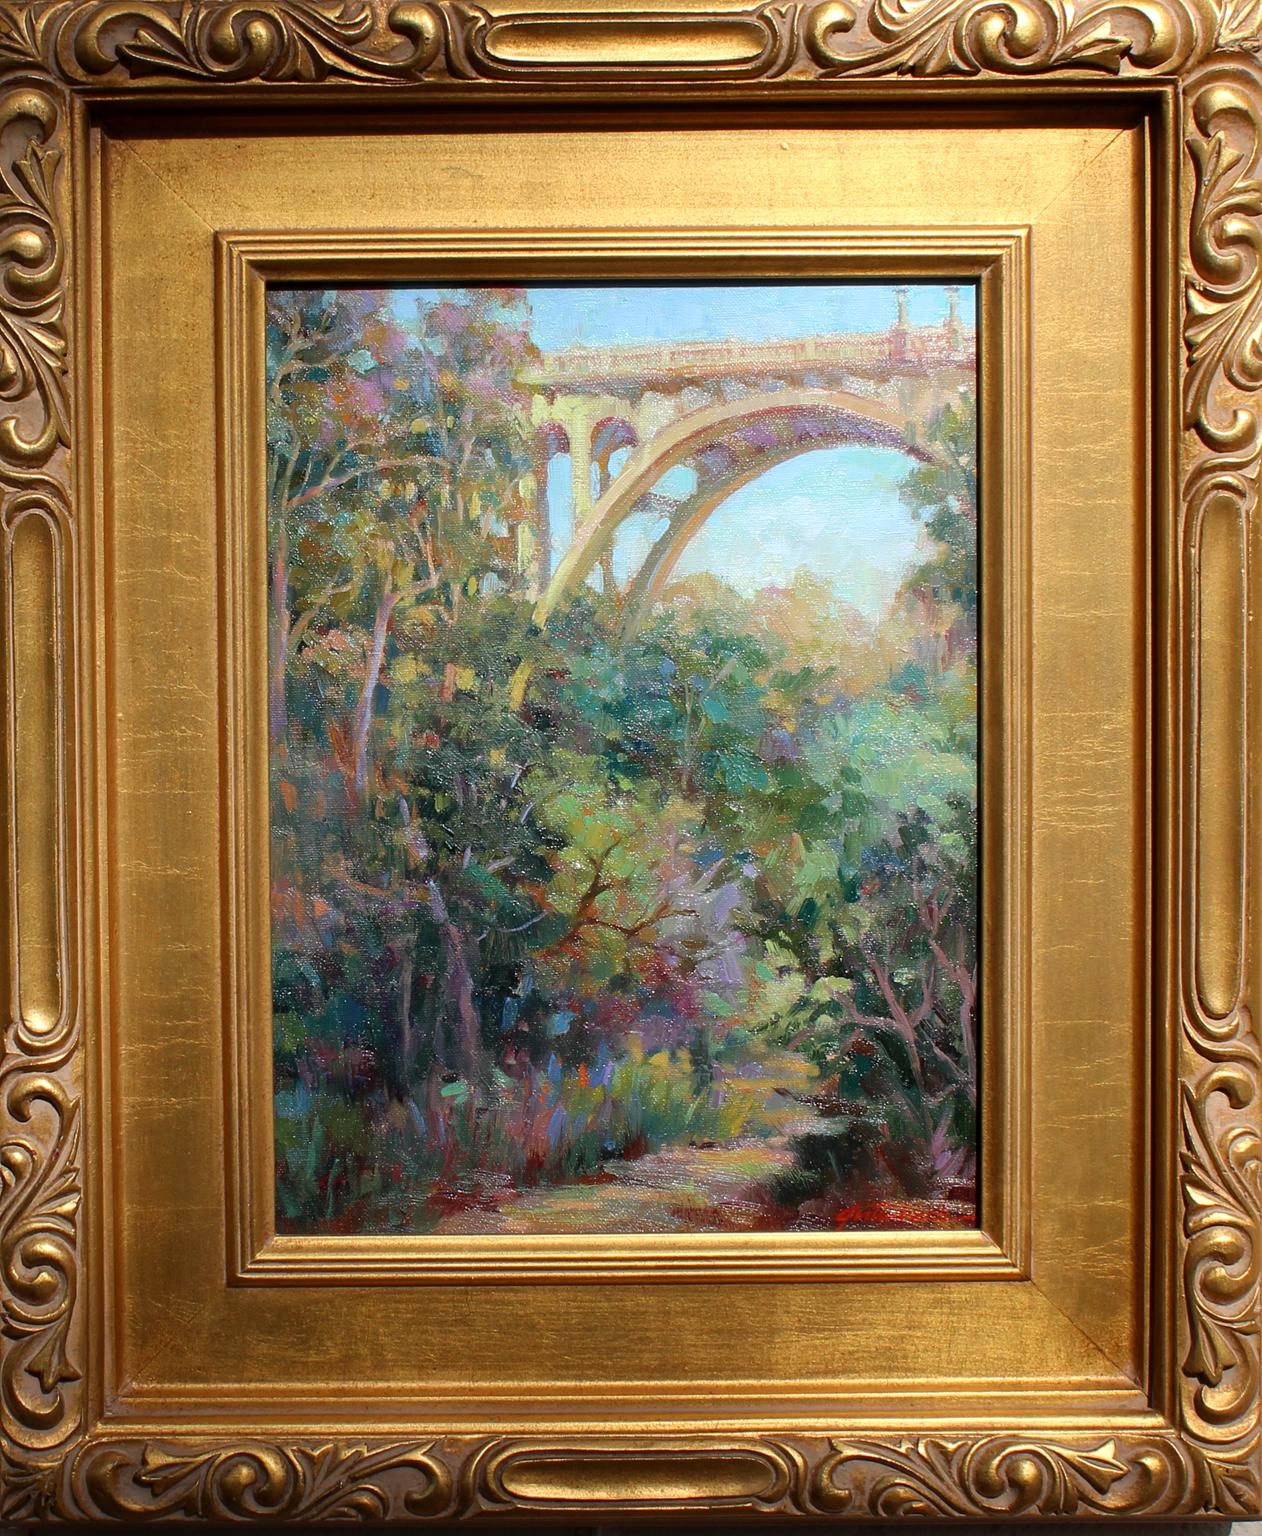 Bridge, Arroyo Seco, Pasadena, CA - Painting by Lynn Gertenbach